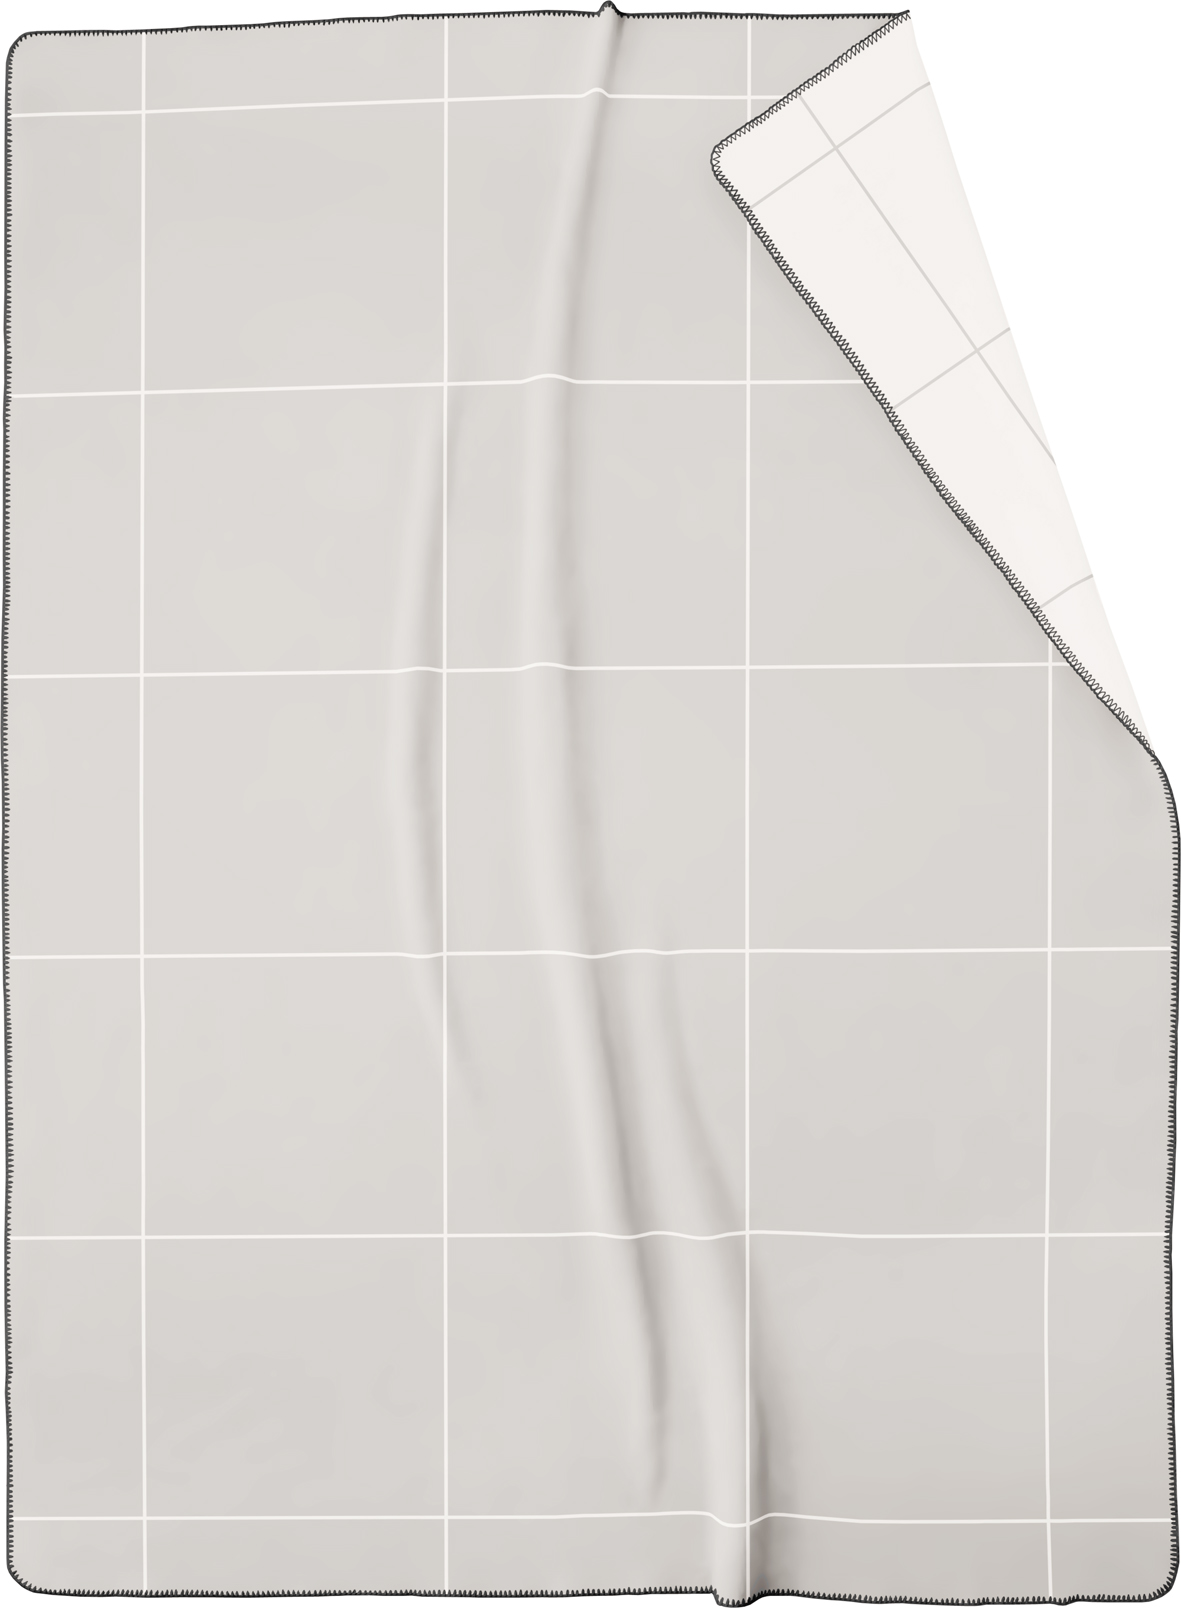 Wolldecke "Grid" mit grobem Karo-Muster in grau - Freisteller